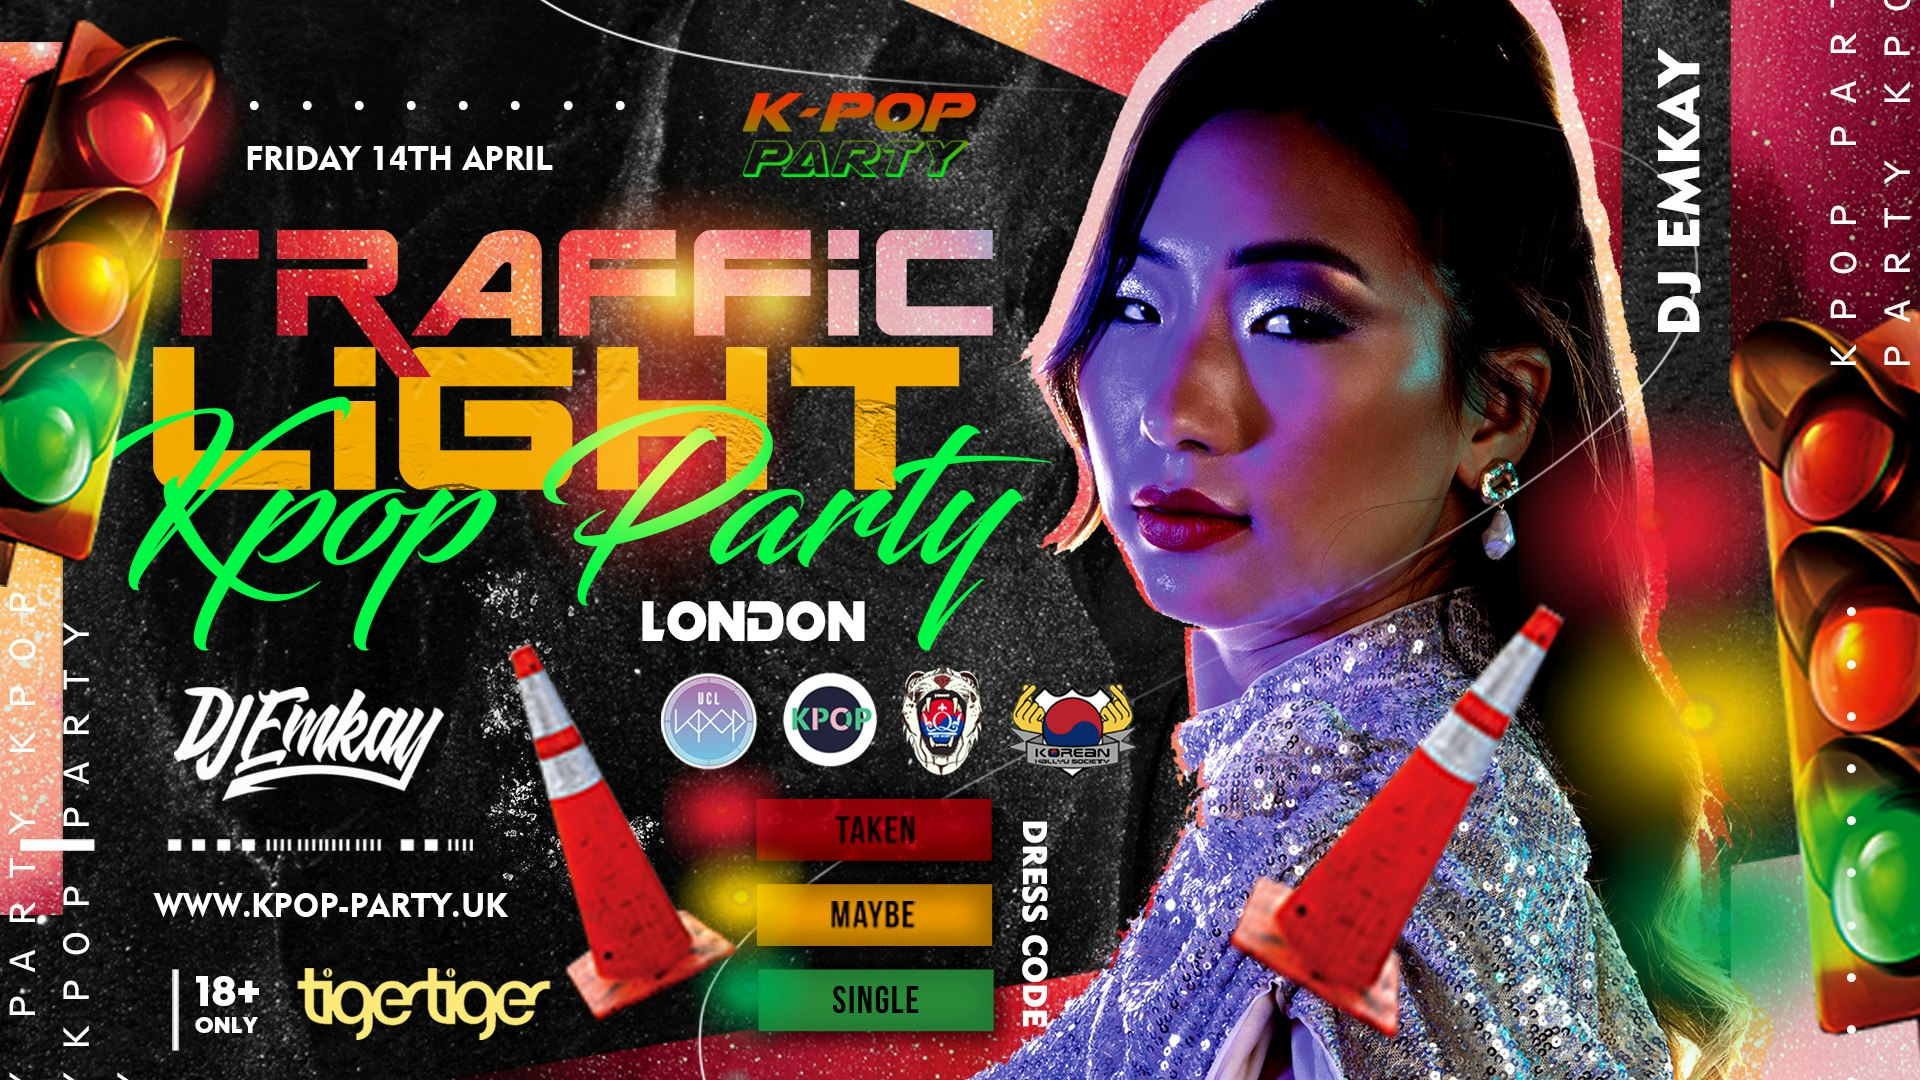 K-Pop Traffic Light Party London with DJ EMKAY | Friday 14th April